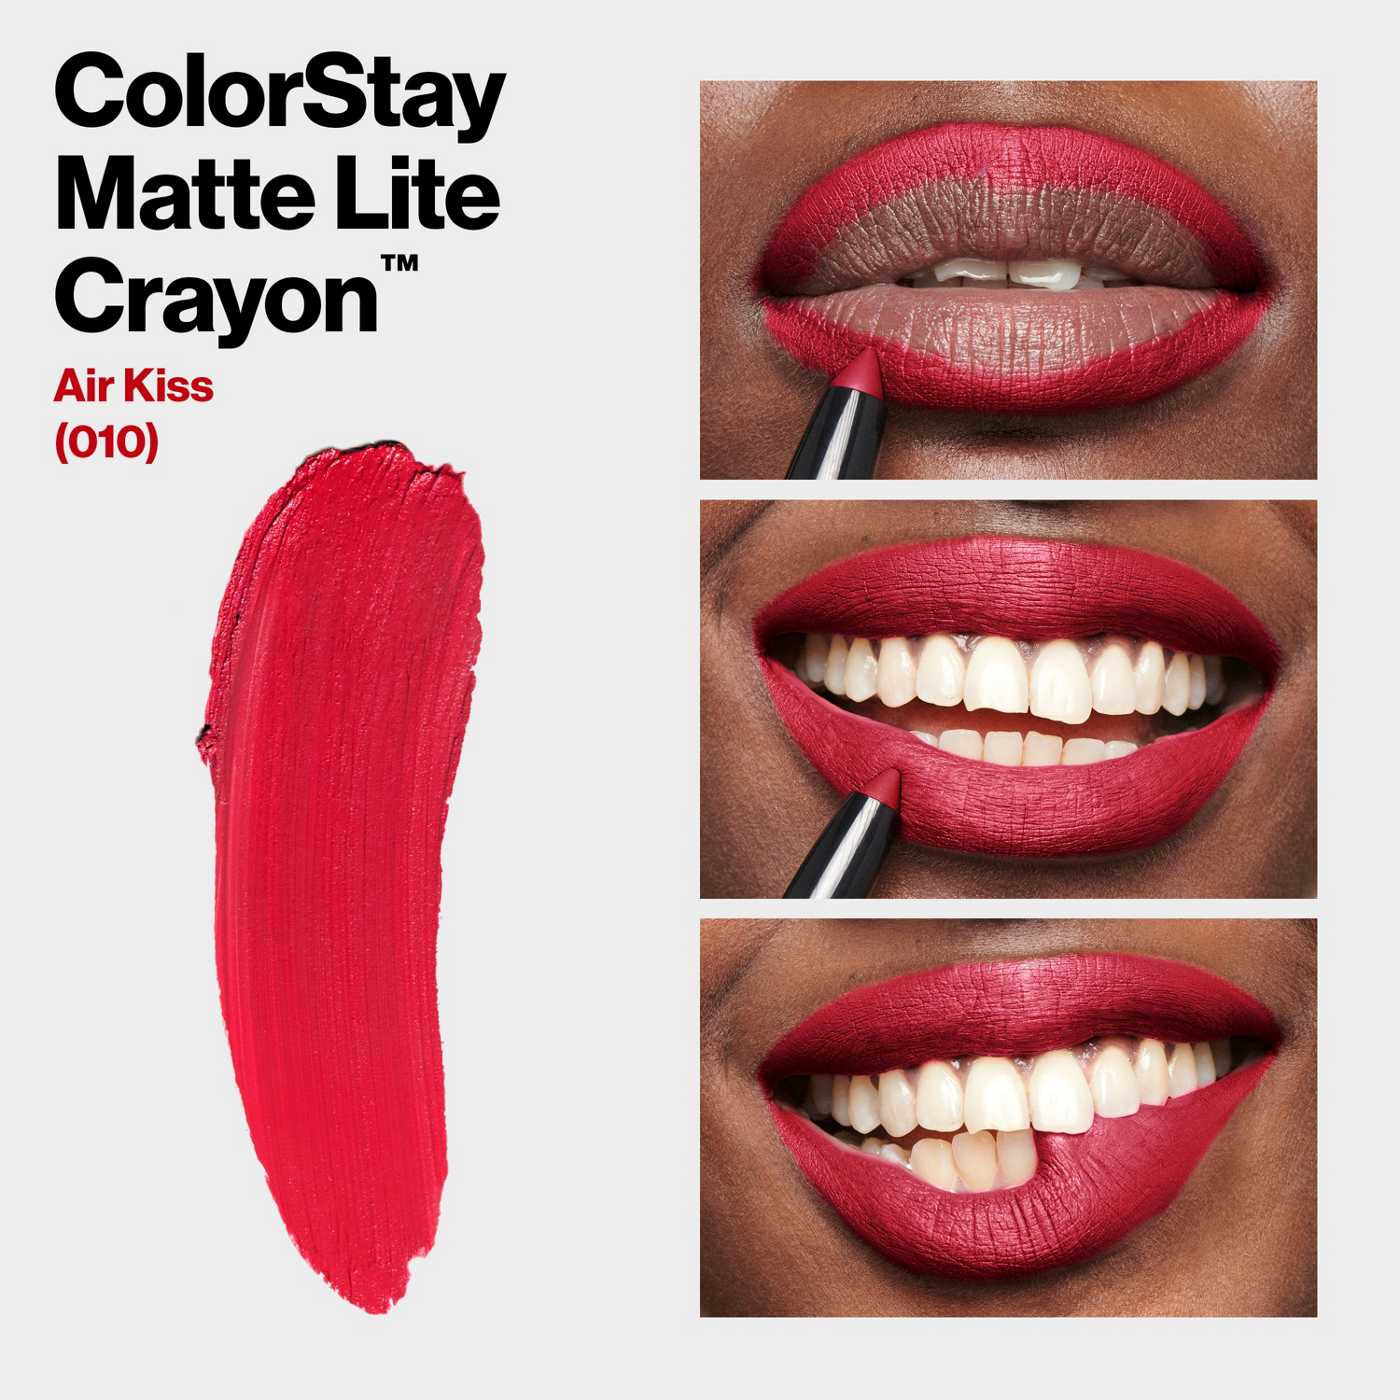 Revlon ColorStay Matte Lite Crayon Lipstick - Air Kiss; image 4 of 7